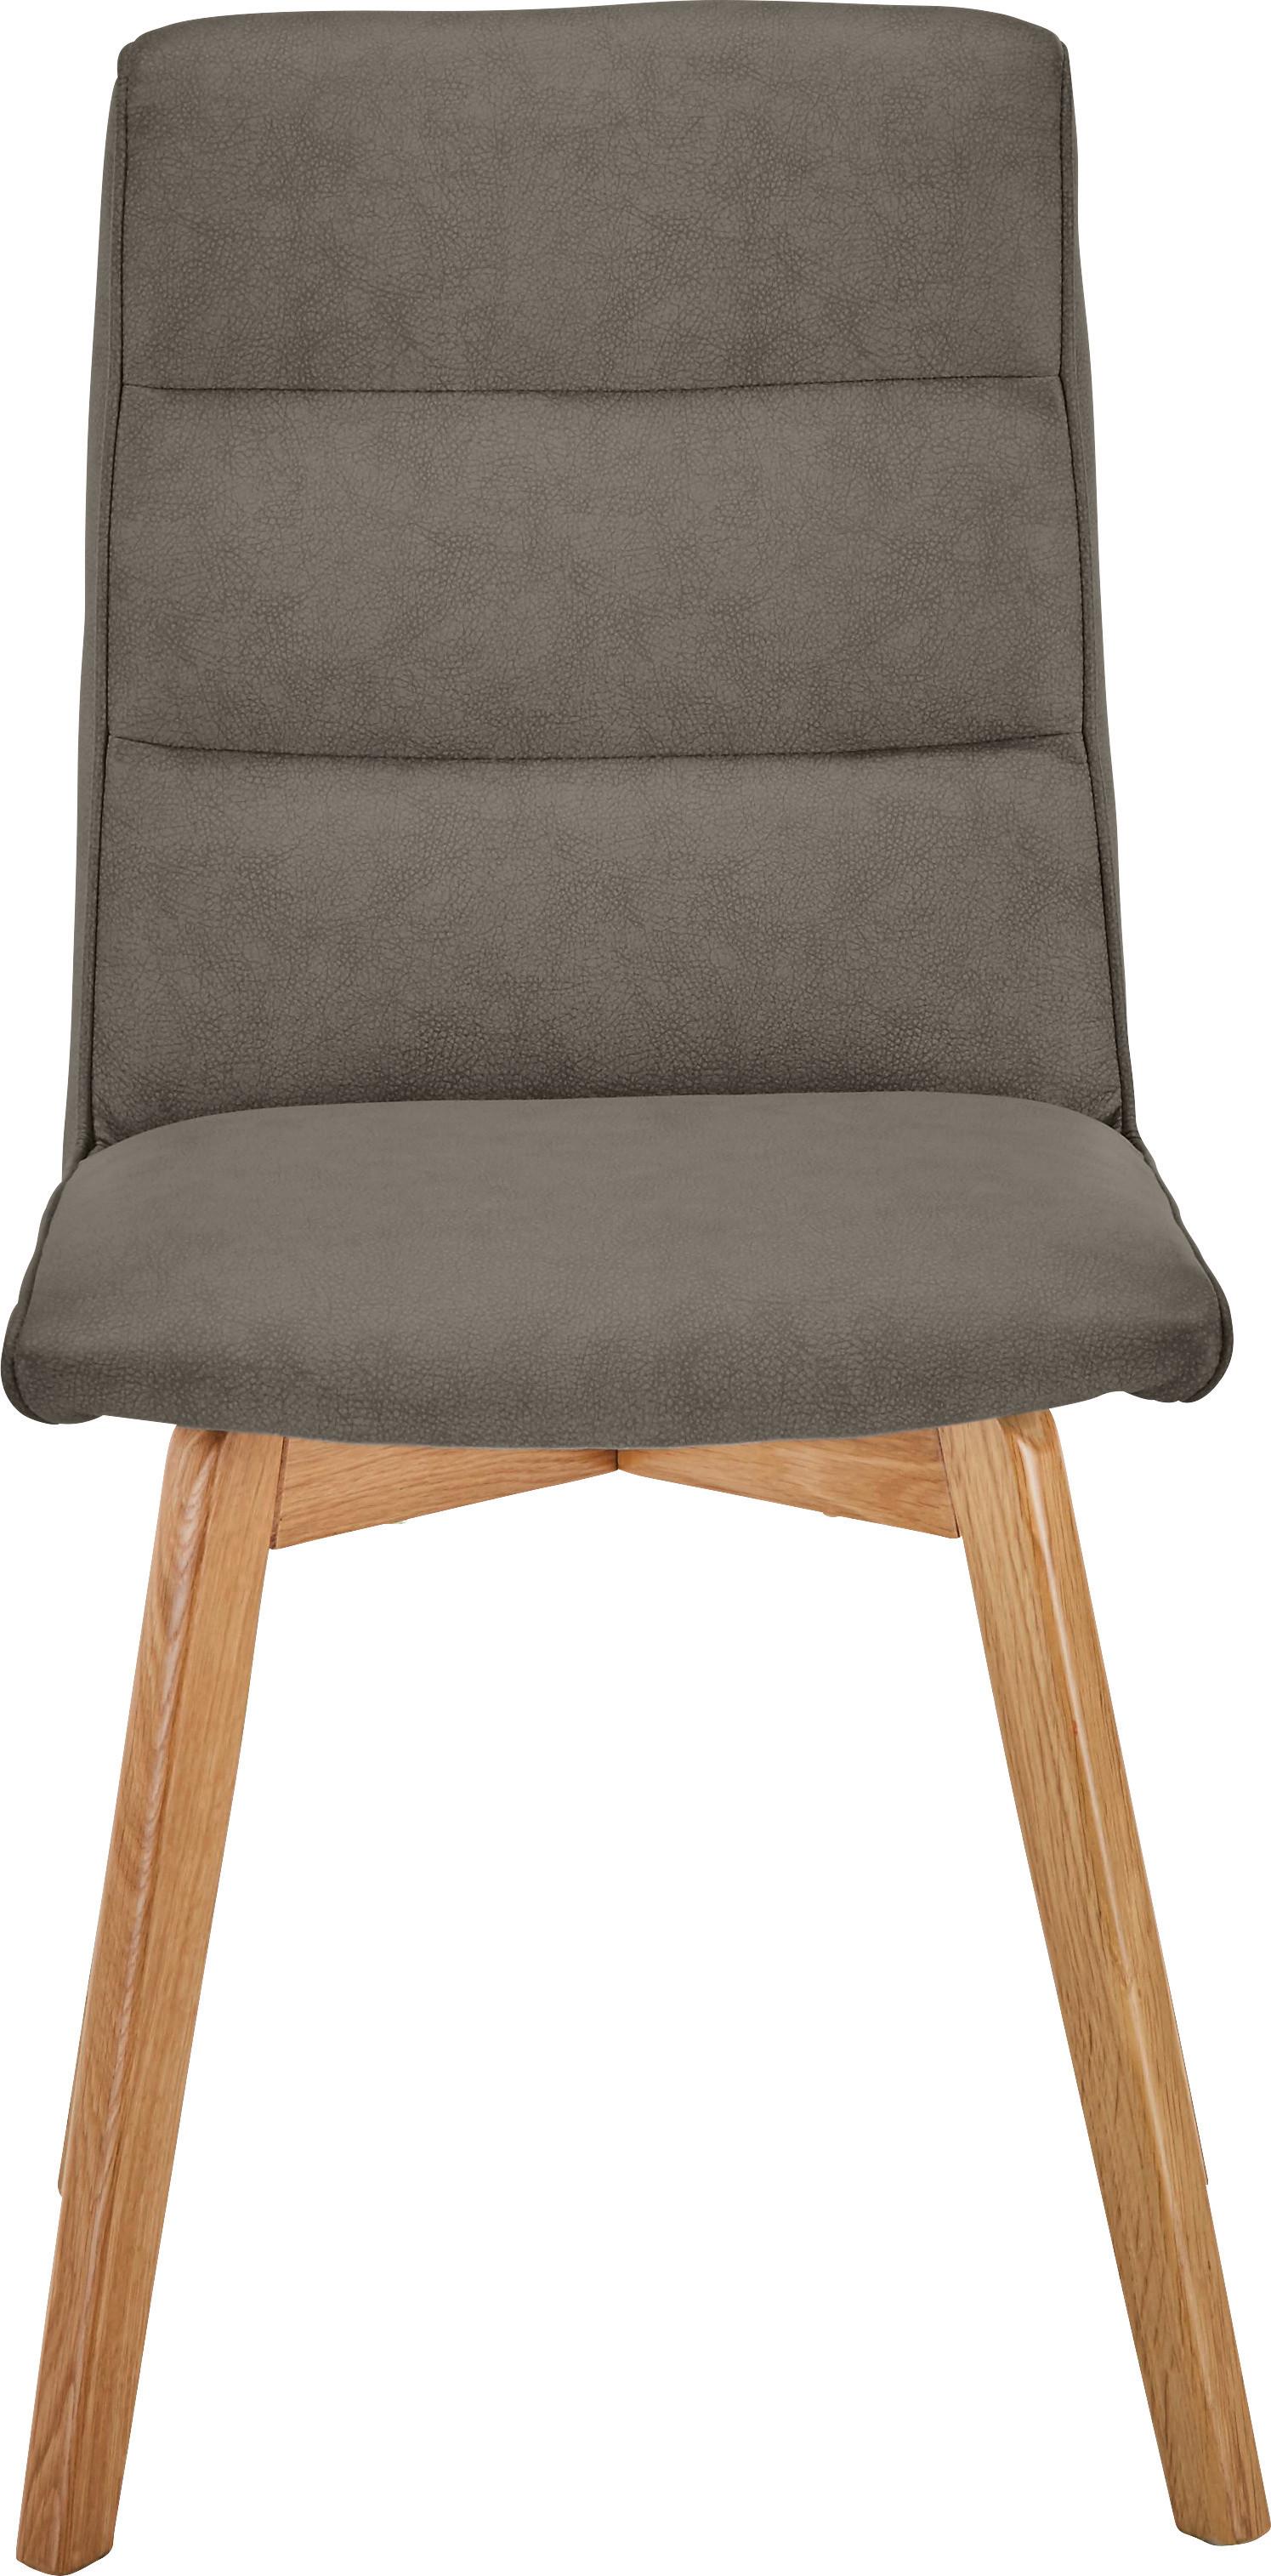 Stol Ellie - barve hrasta/rjava, Moderno, tekstil/les (44/87/55,5cm) - Zandiara